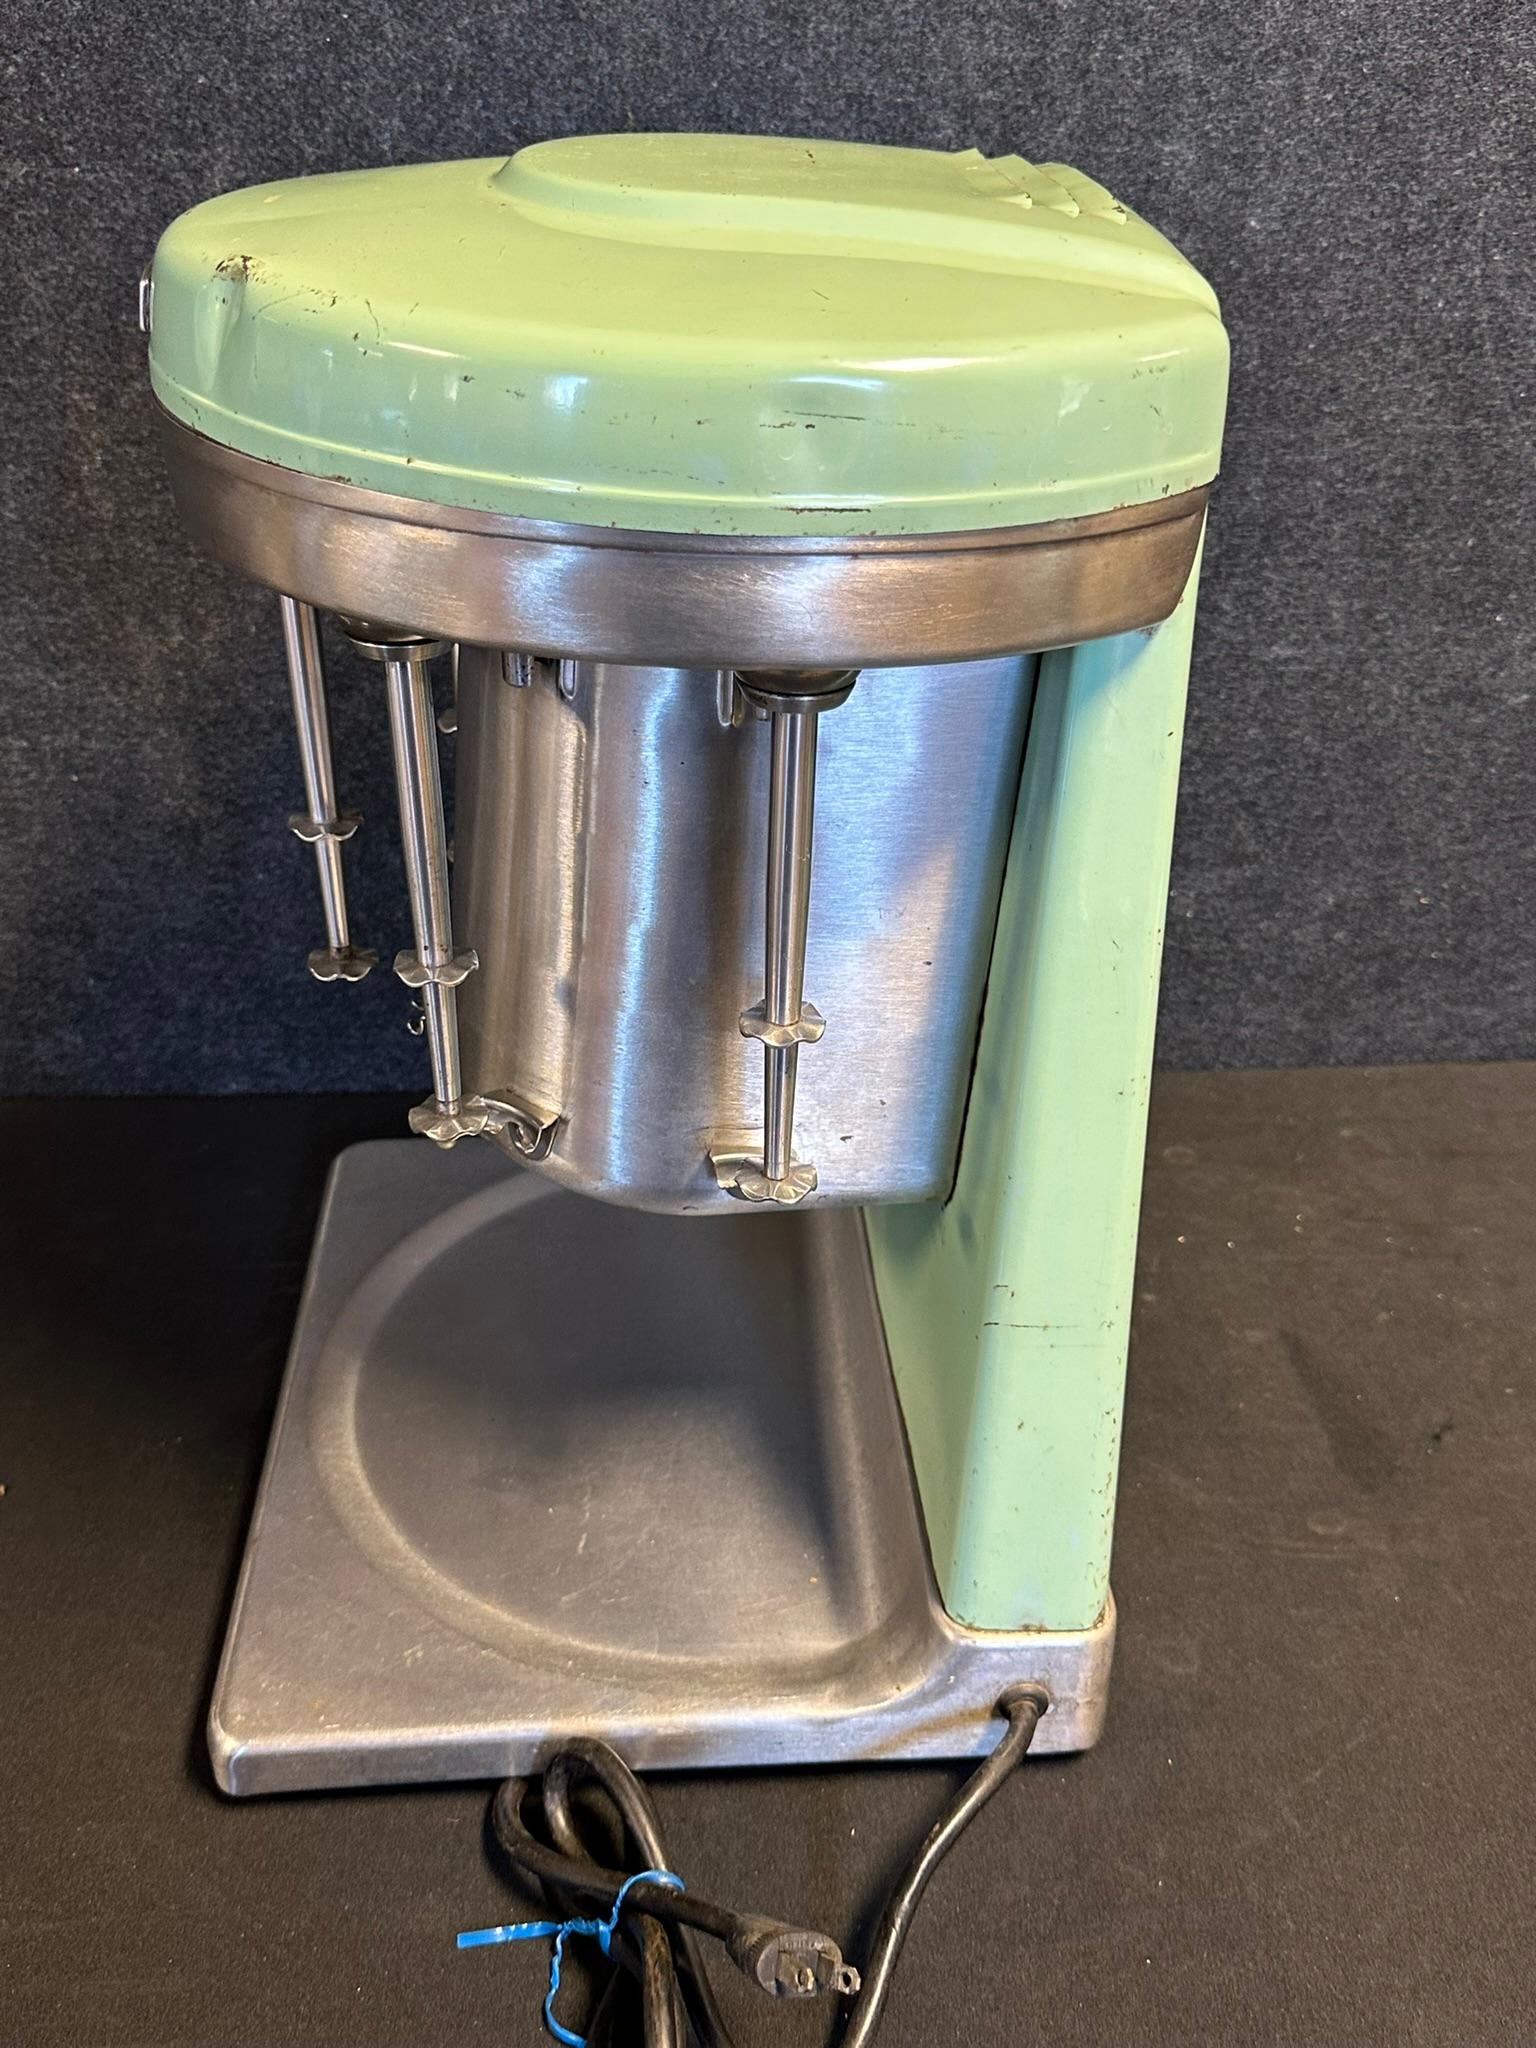 Vintage Soda Shoppe Jadeite Green 5 Unit Multimixer Malt Shake Mixign Machine by Prince Castle Model